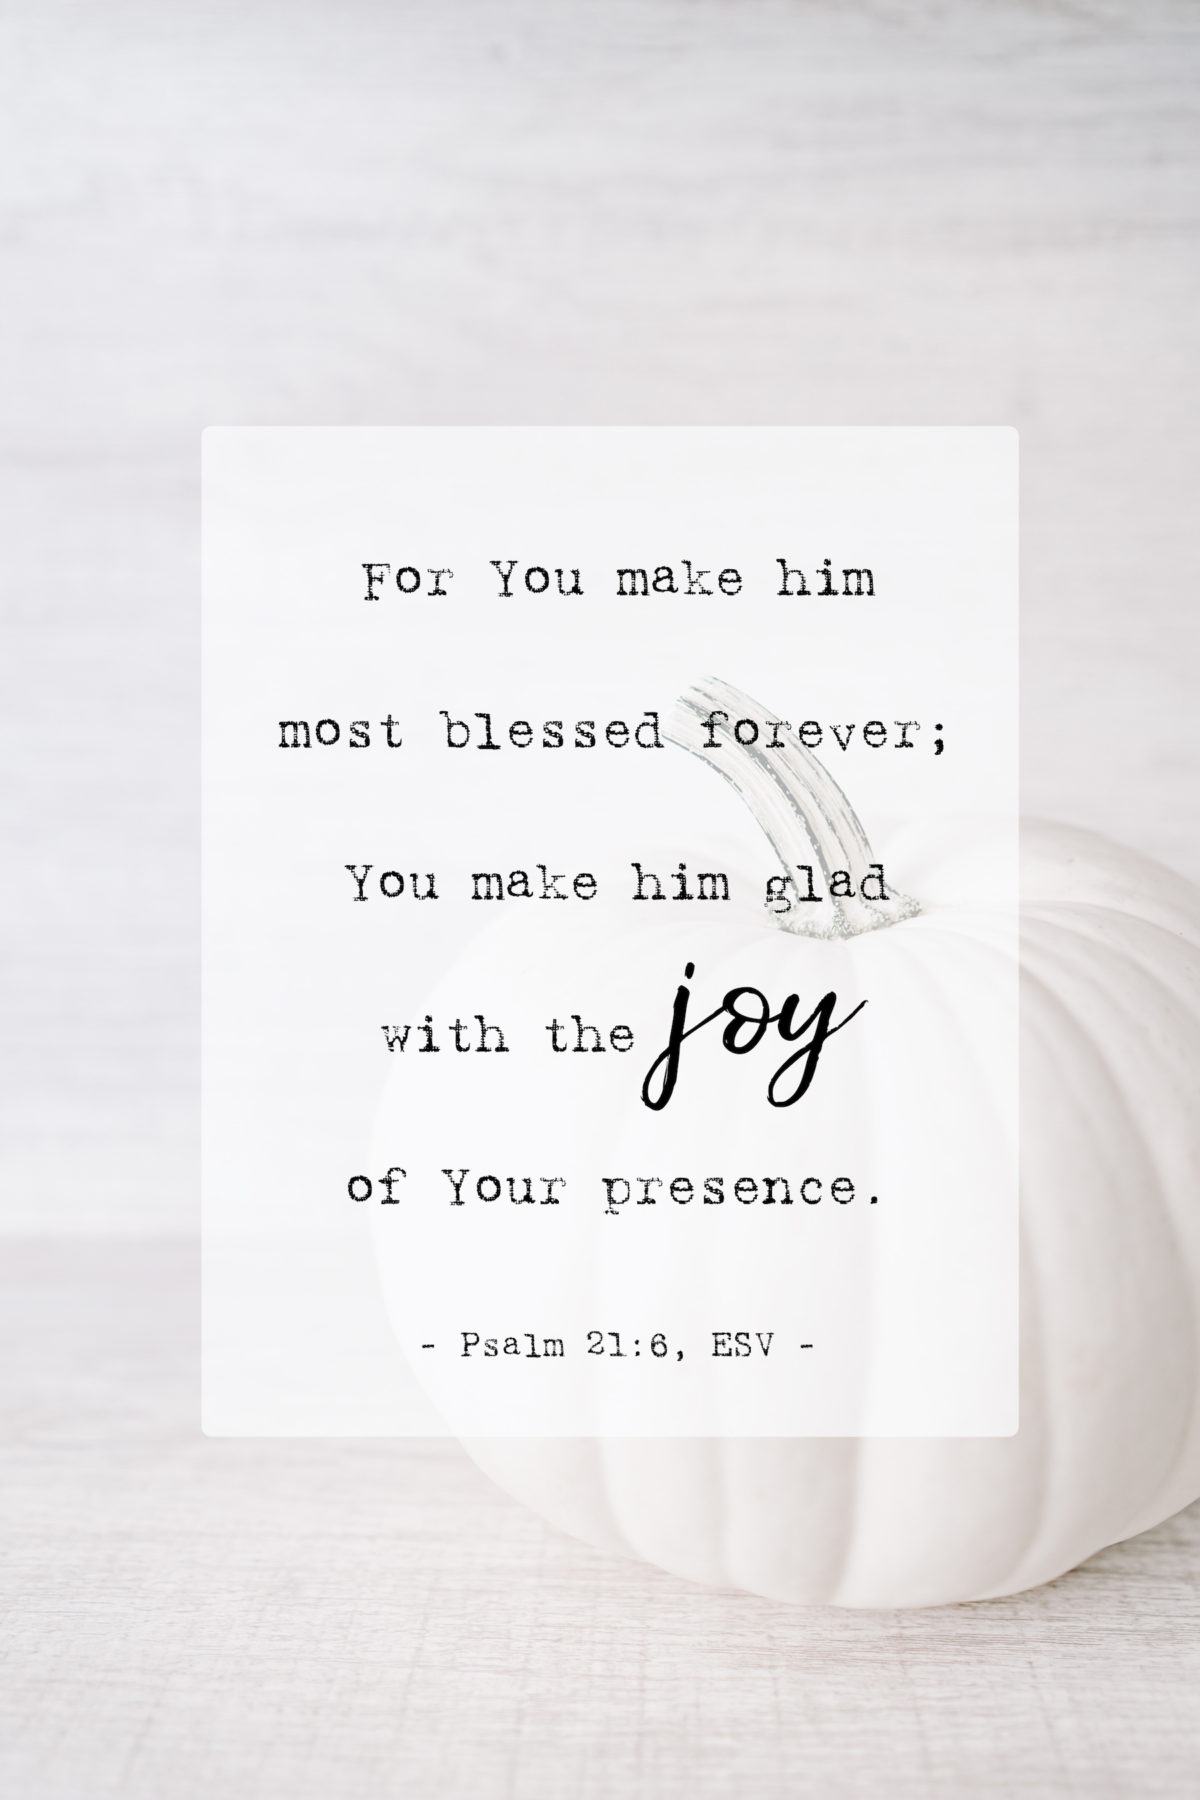 bible verses about joy